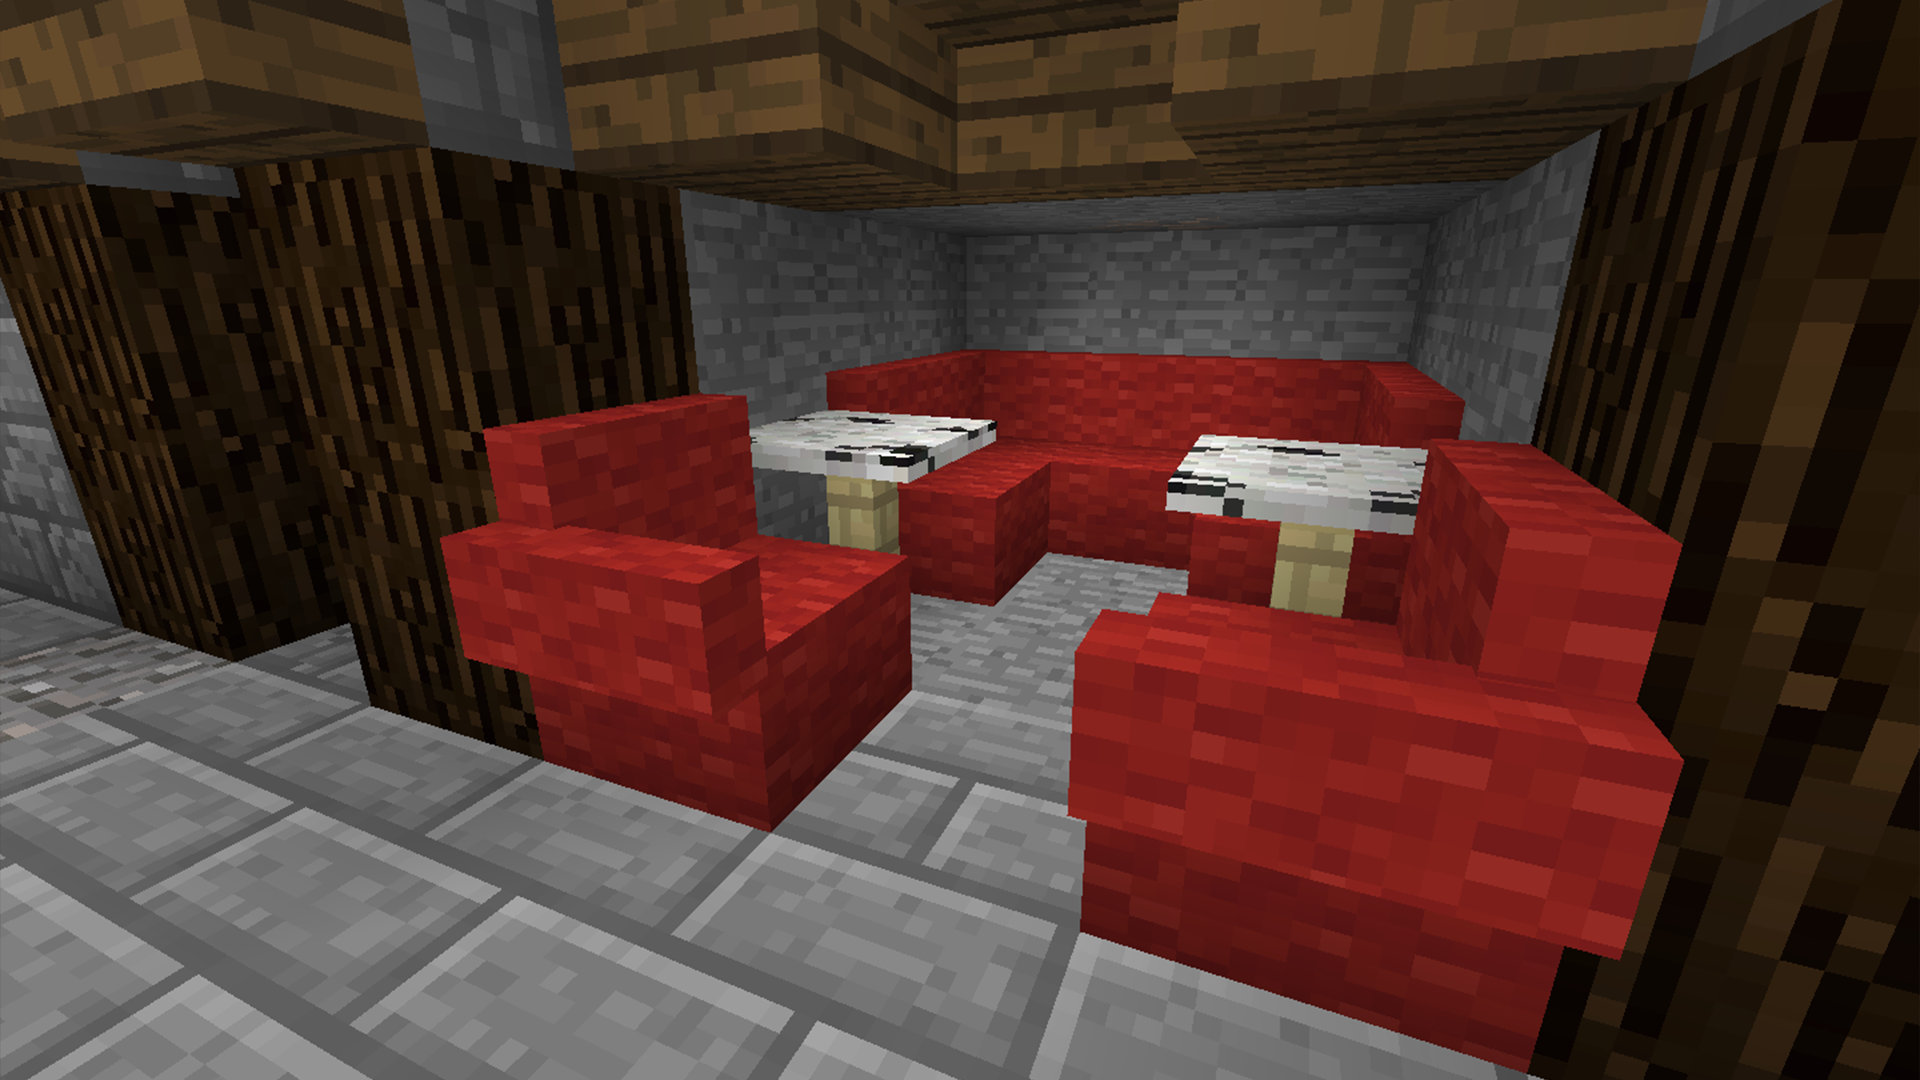 Сборка мебели майнкрафт. Minecraft 1.12.2 Mod мебель. Мод на мебель в майнкрафт 1.12.2. Mr Crayfish Furniture Mod 1.12.2 кран. Мебель майнкрафт 1.16.5 без модов.